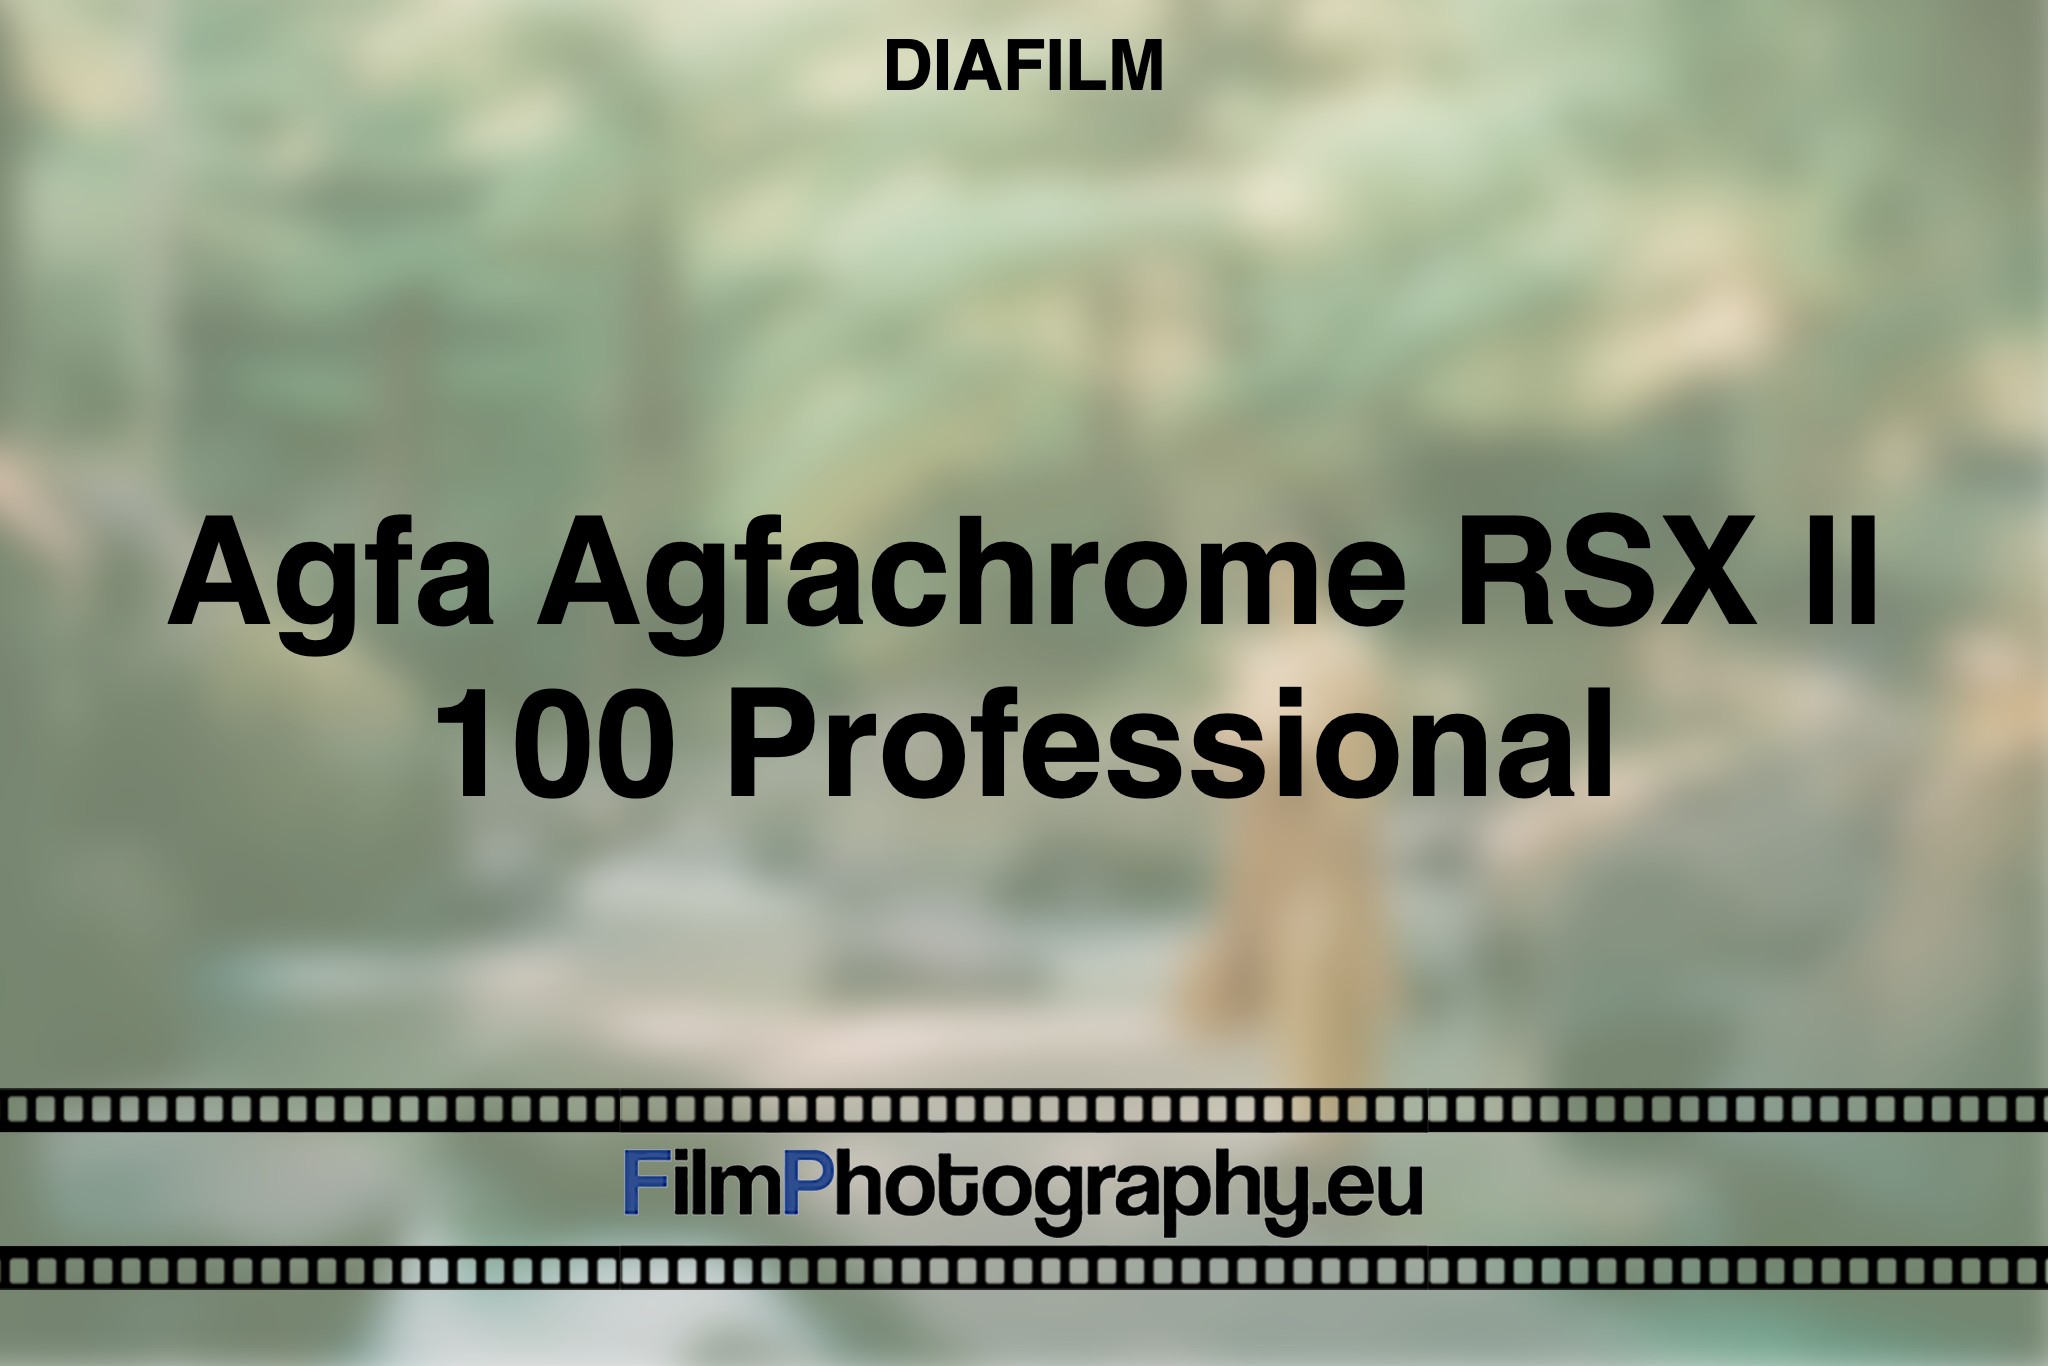 agfa-agfachrome-rsx-ii-100-professional-diafilm-bnv